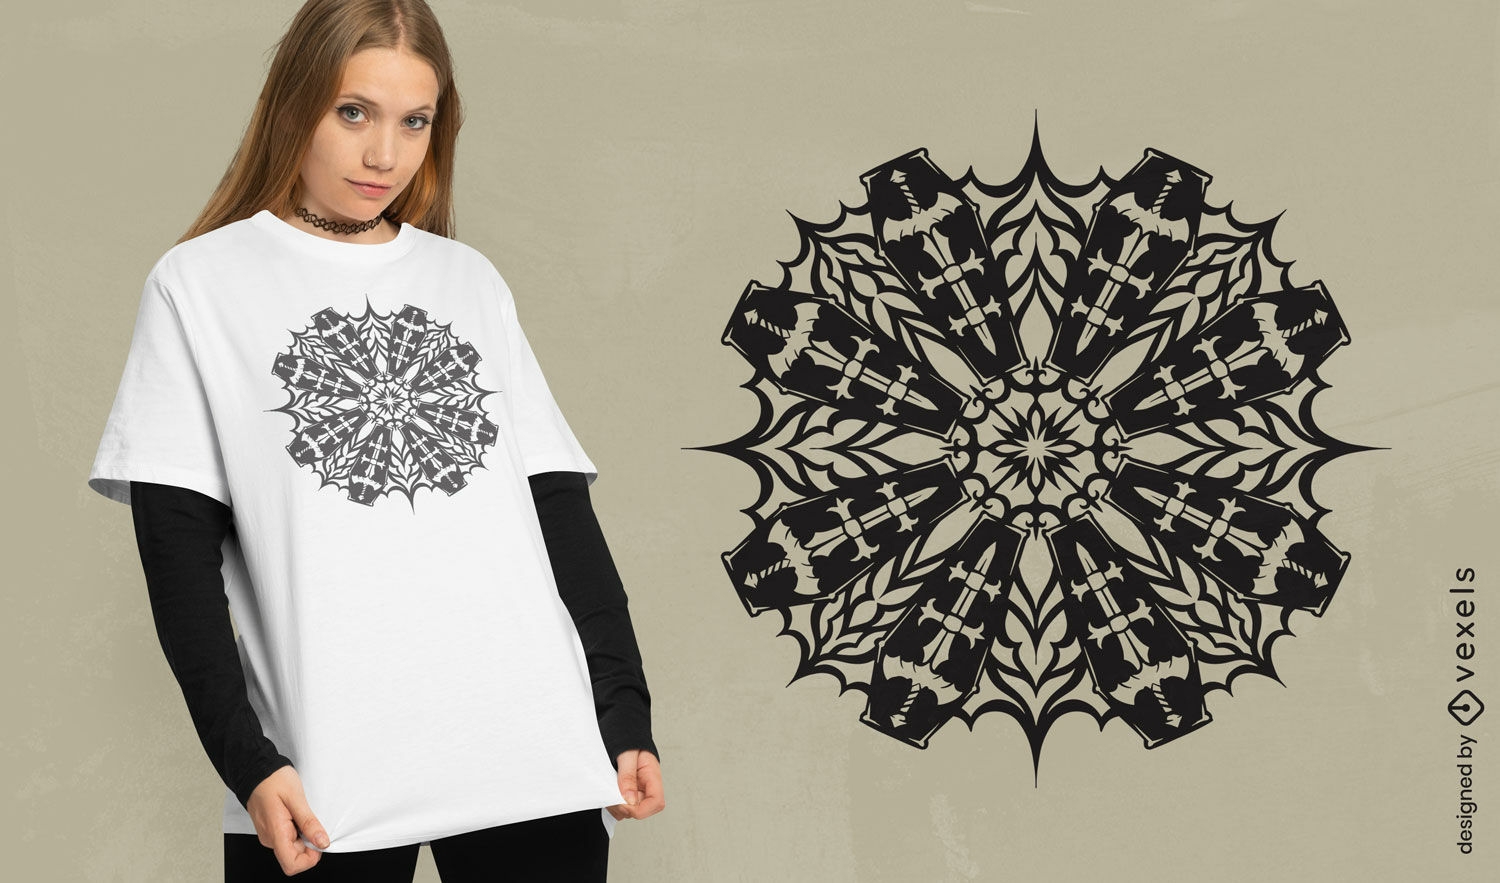 Gothic coffins-snowflake pattern t-shirt design